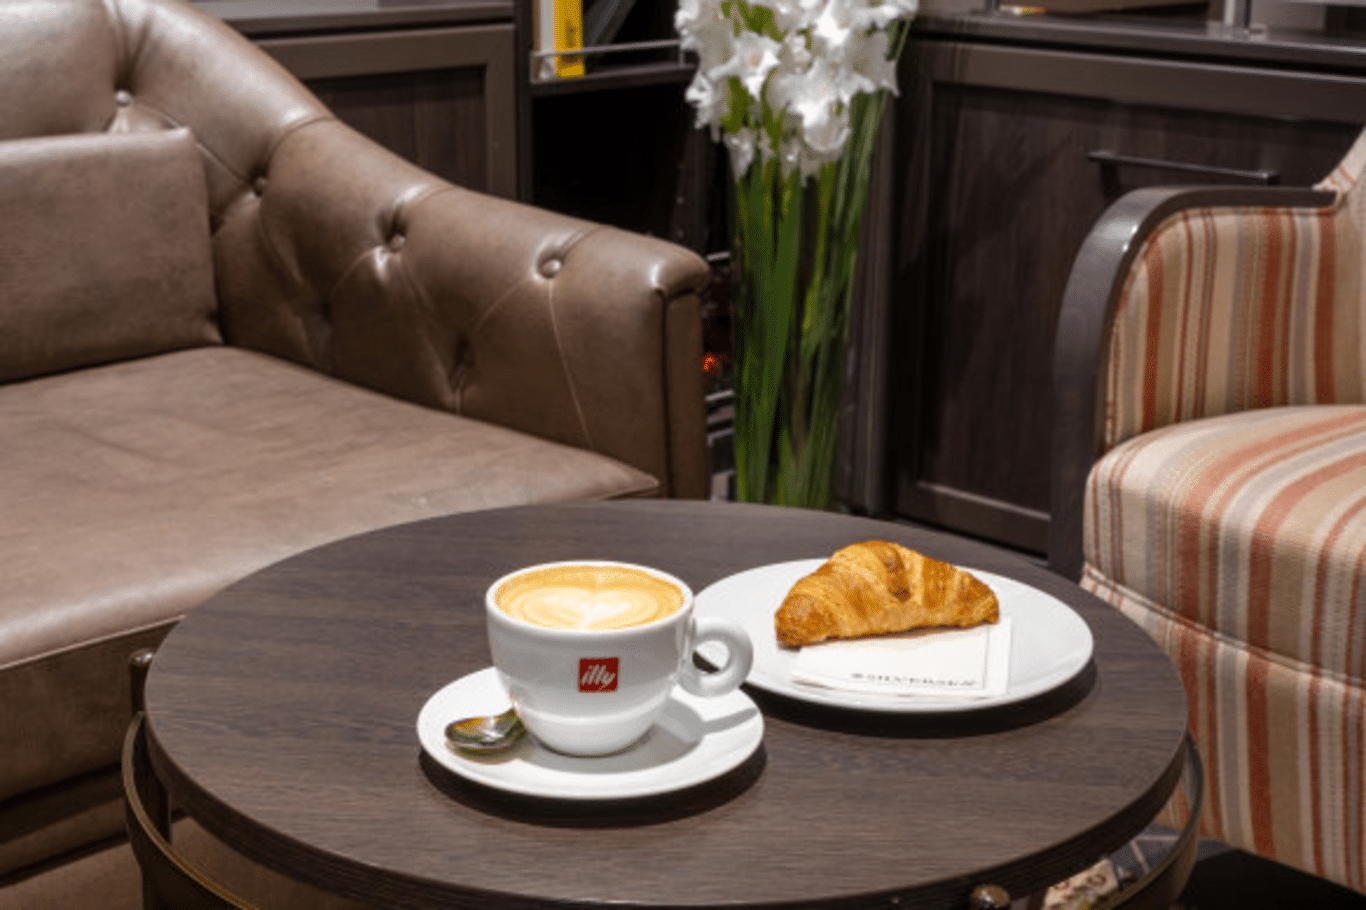 Luxury Cruise Ship Brings Authentic Italian Coffee to Australian Passengers